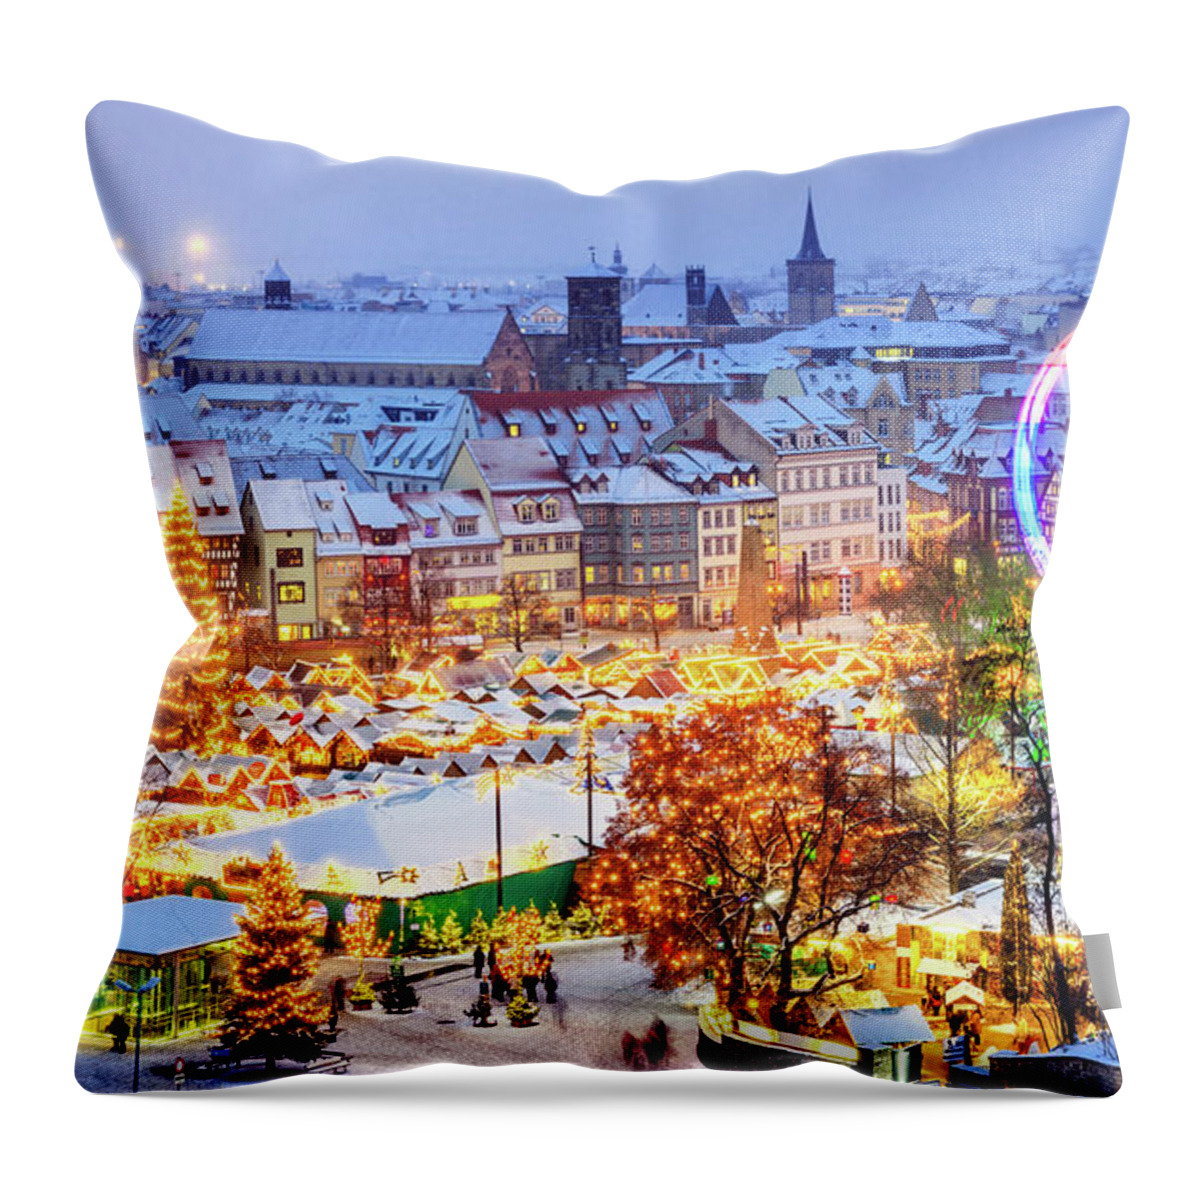 Snow Throw Pillow featuring the photograph Christmas Market Erfurt by Juergen Sack